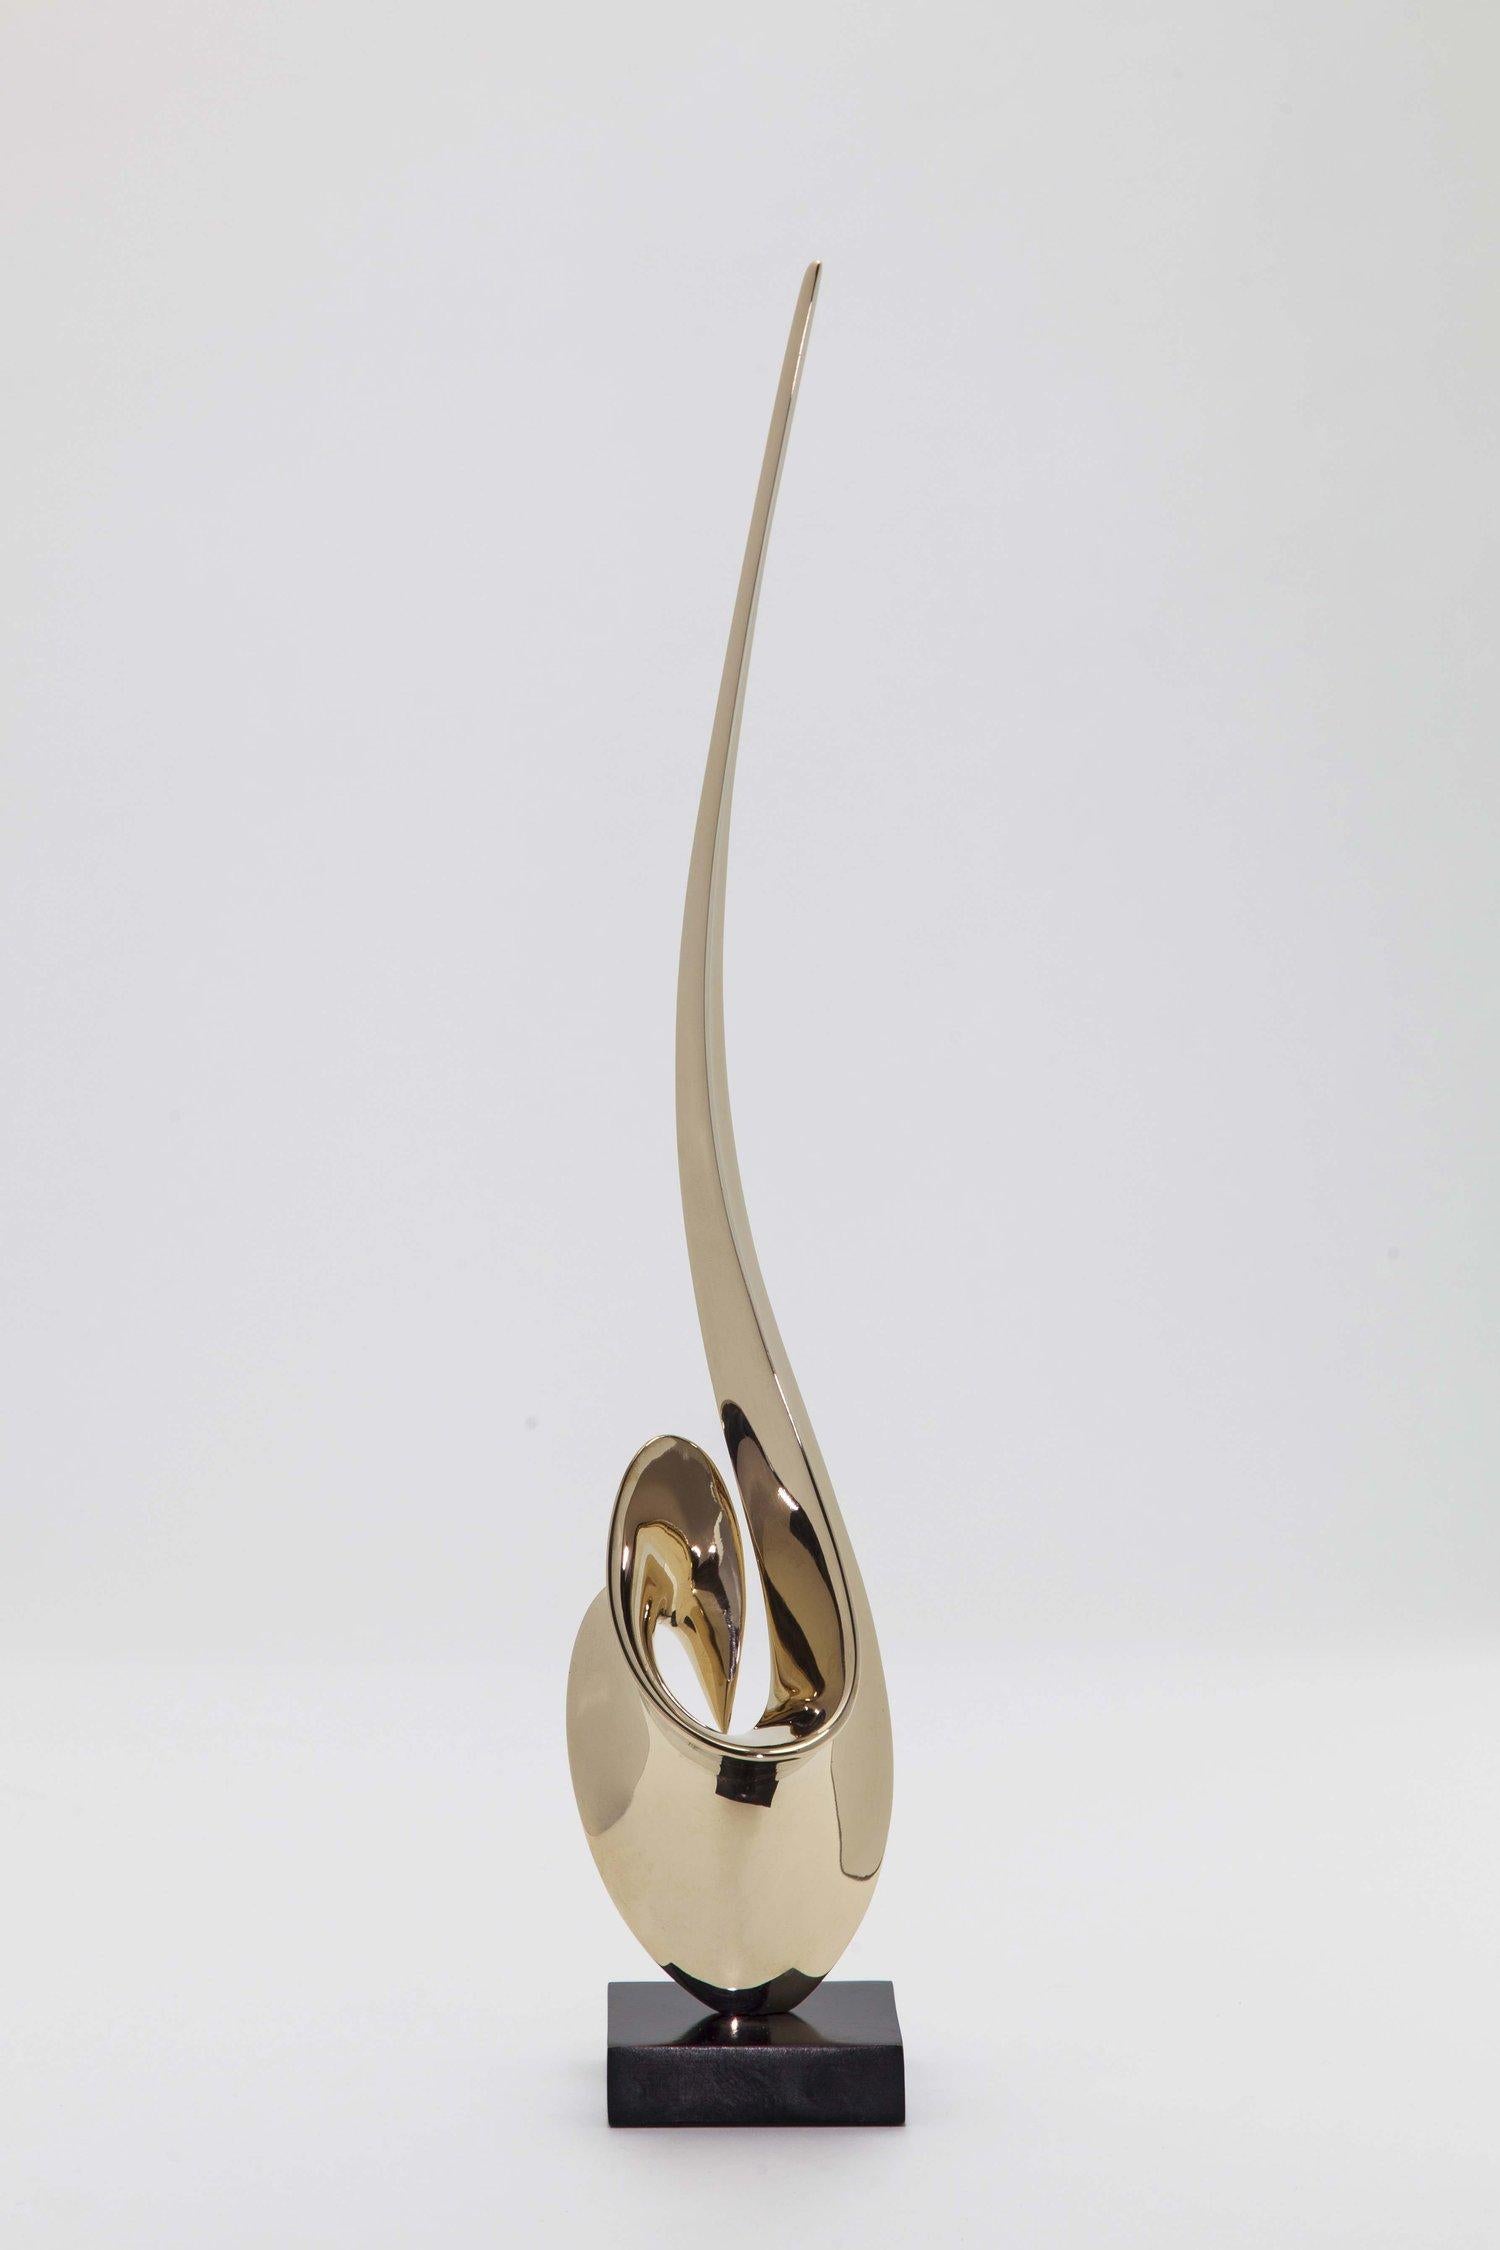 Unfurling Maquette - Gold Abstract Sculpture by Hugh Chapman